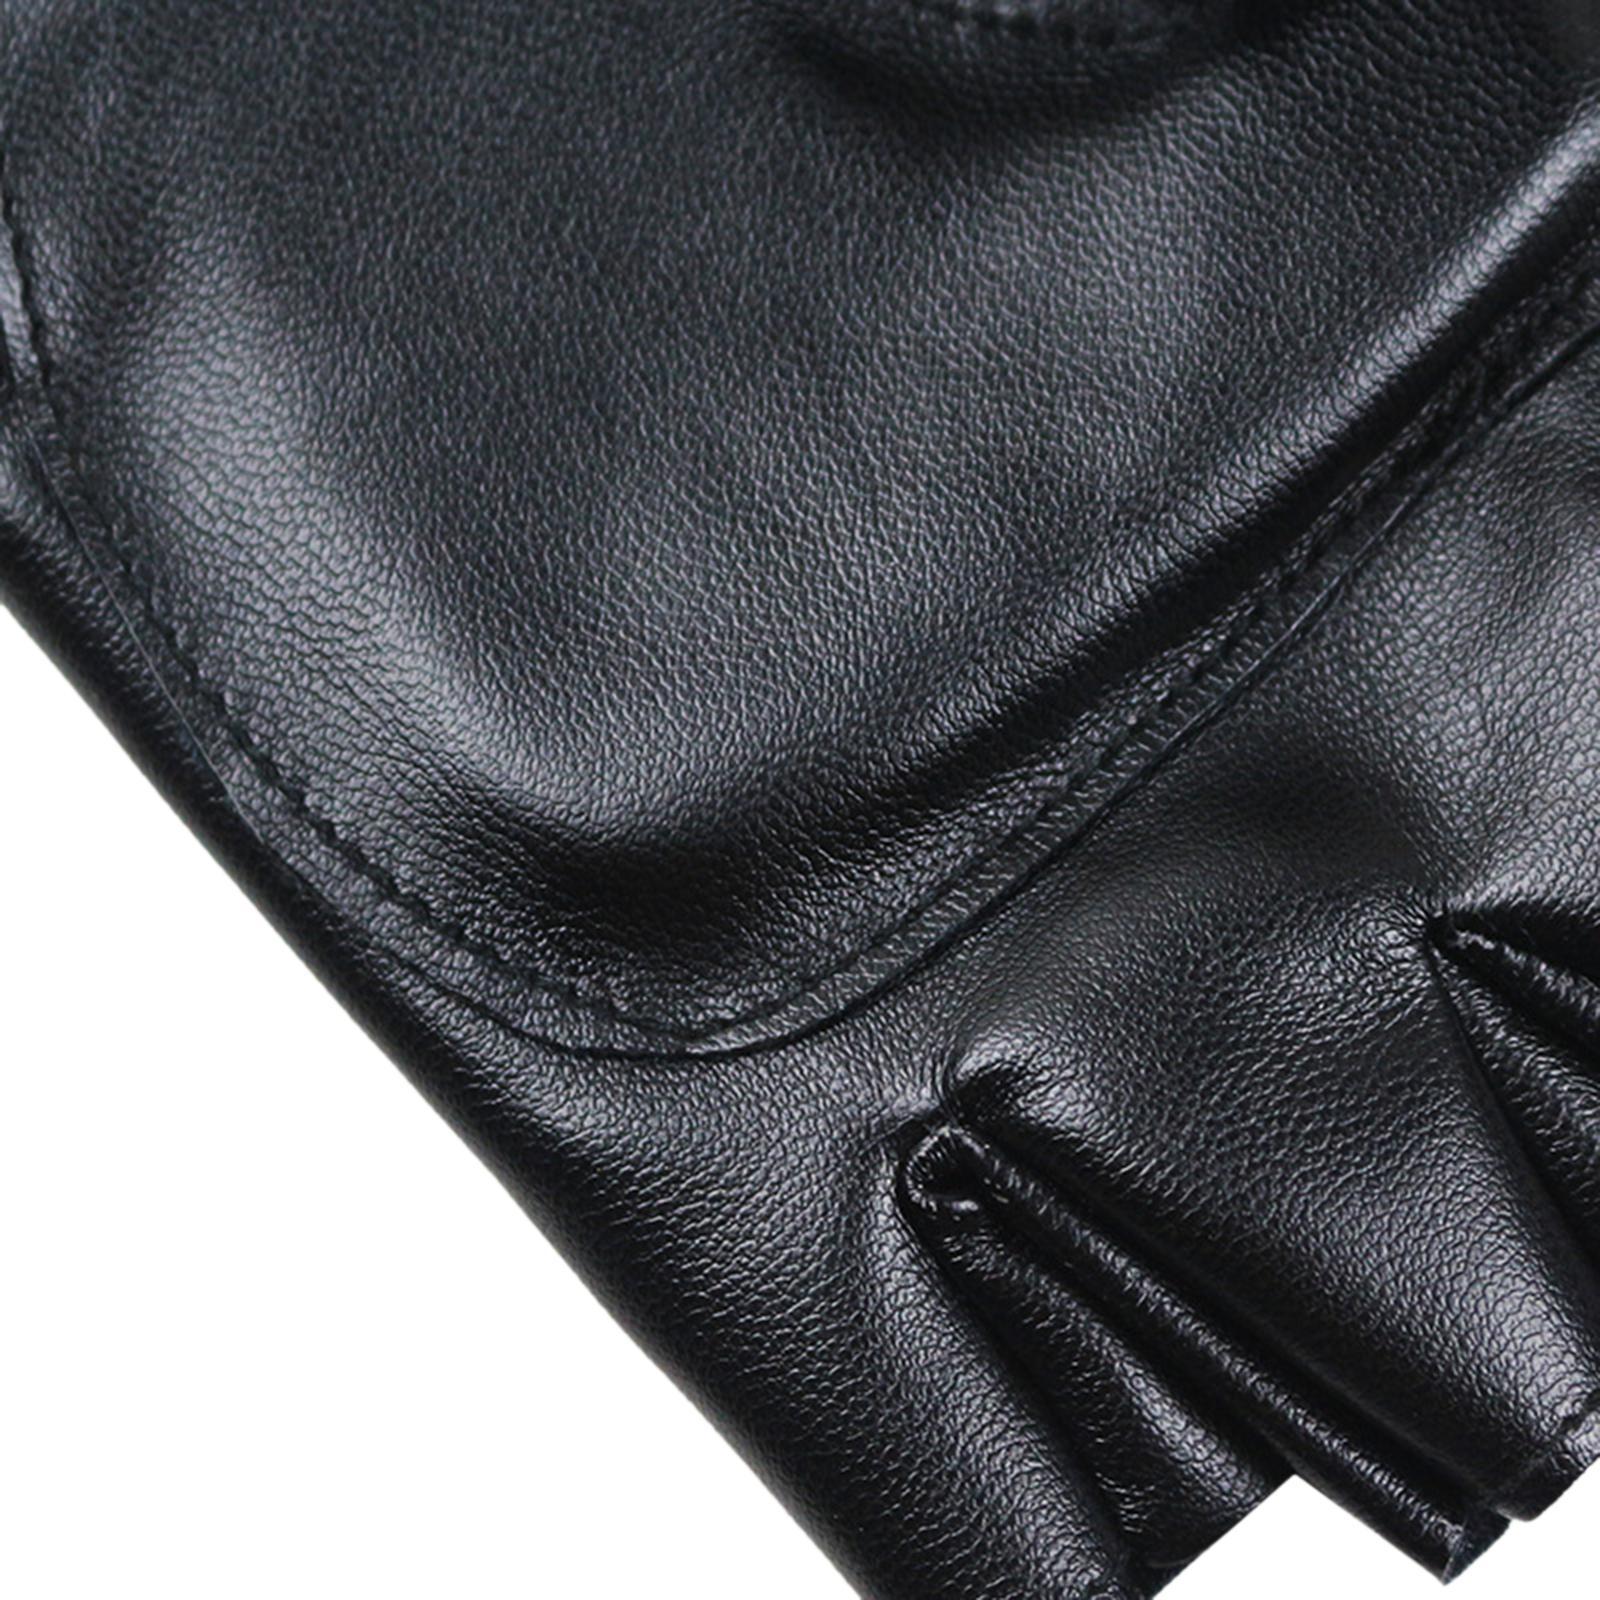 Wear Resistant Half Finger Gloves Lightweight PU Leather Gloves for Driving